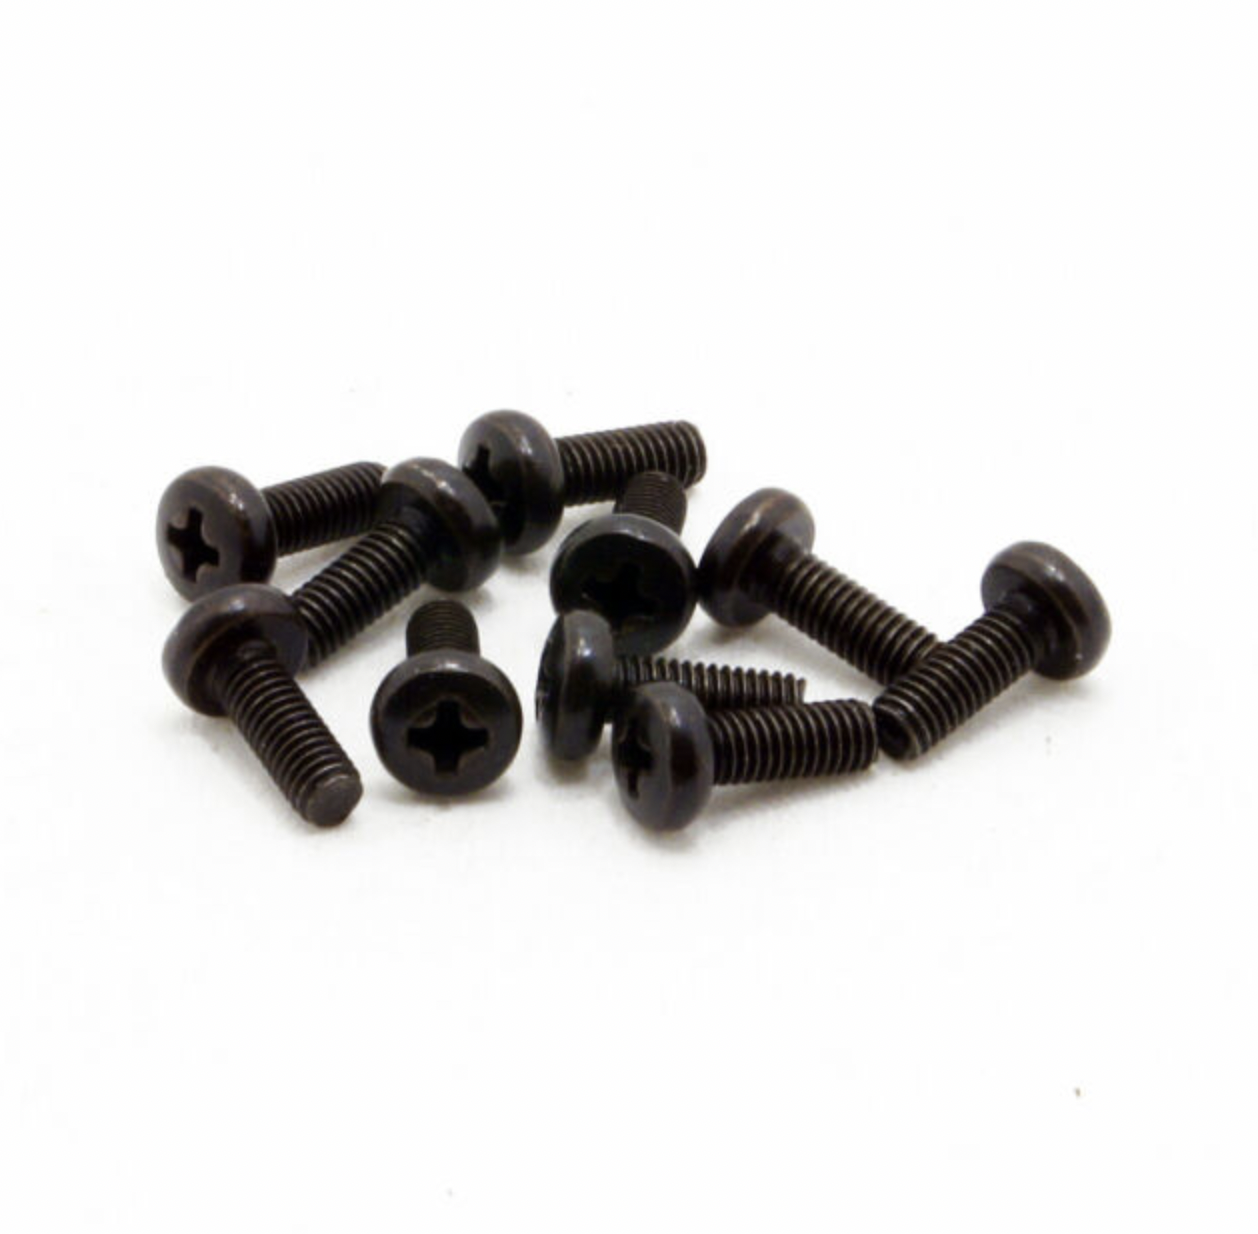 100pcs of 8mm M3 Black pan head nylon Screws